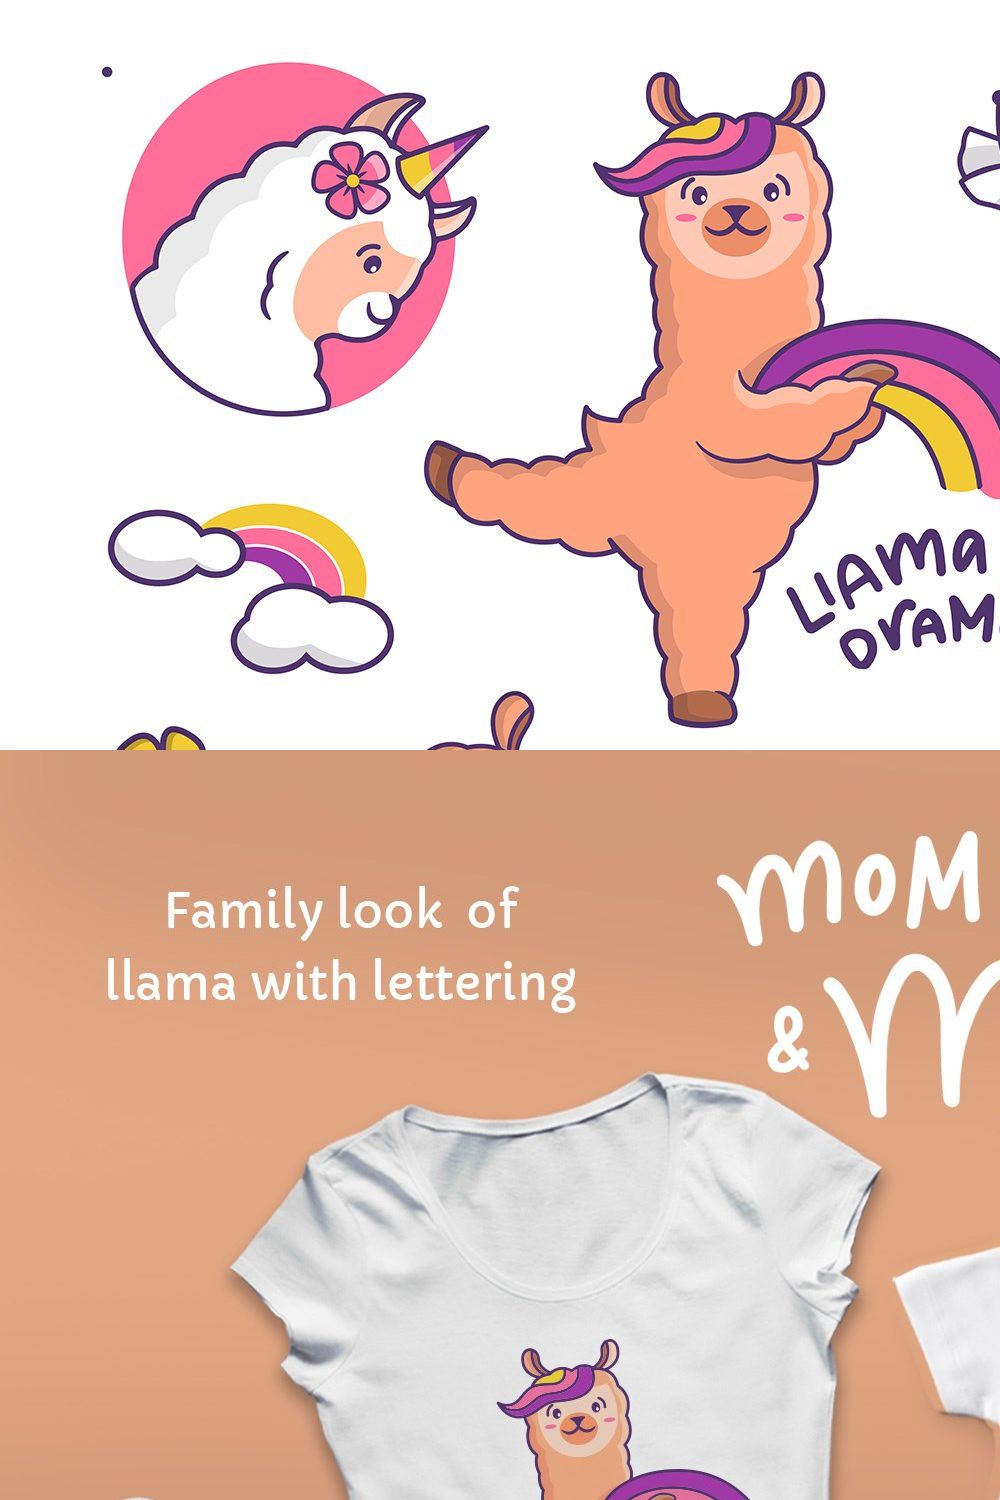 Llama no drama. Apparel designs pinterest preview image.